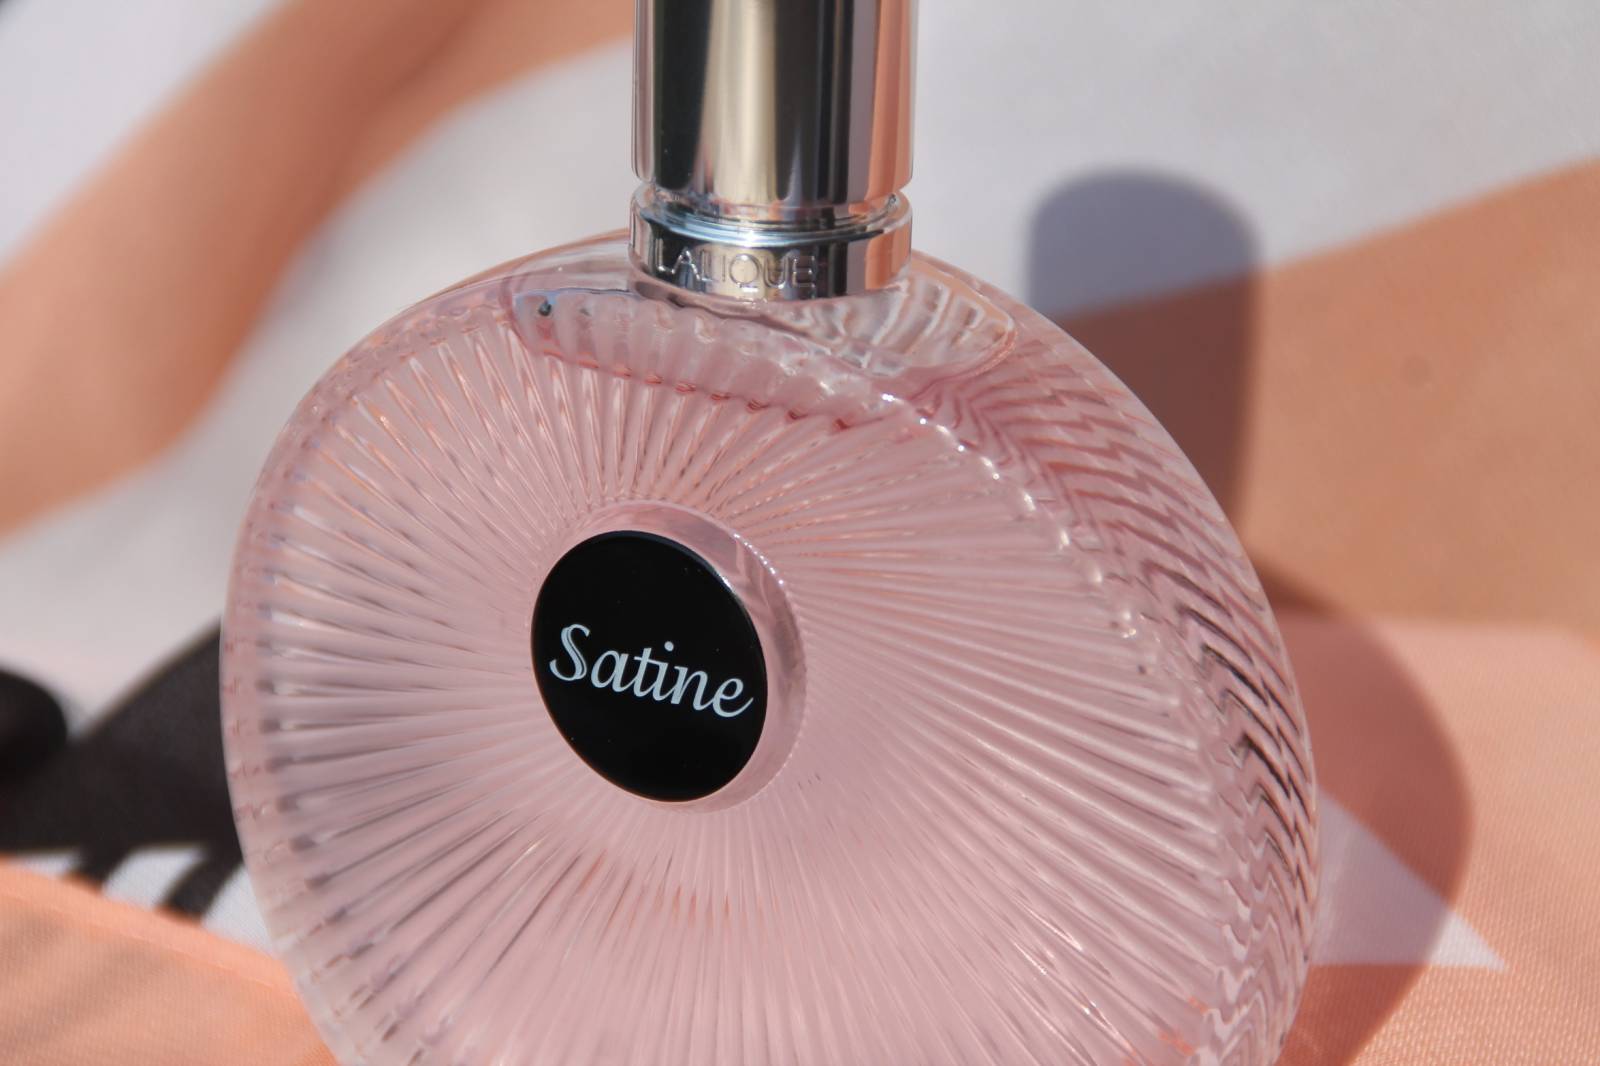 Lalique Satine